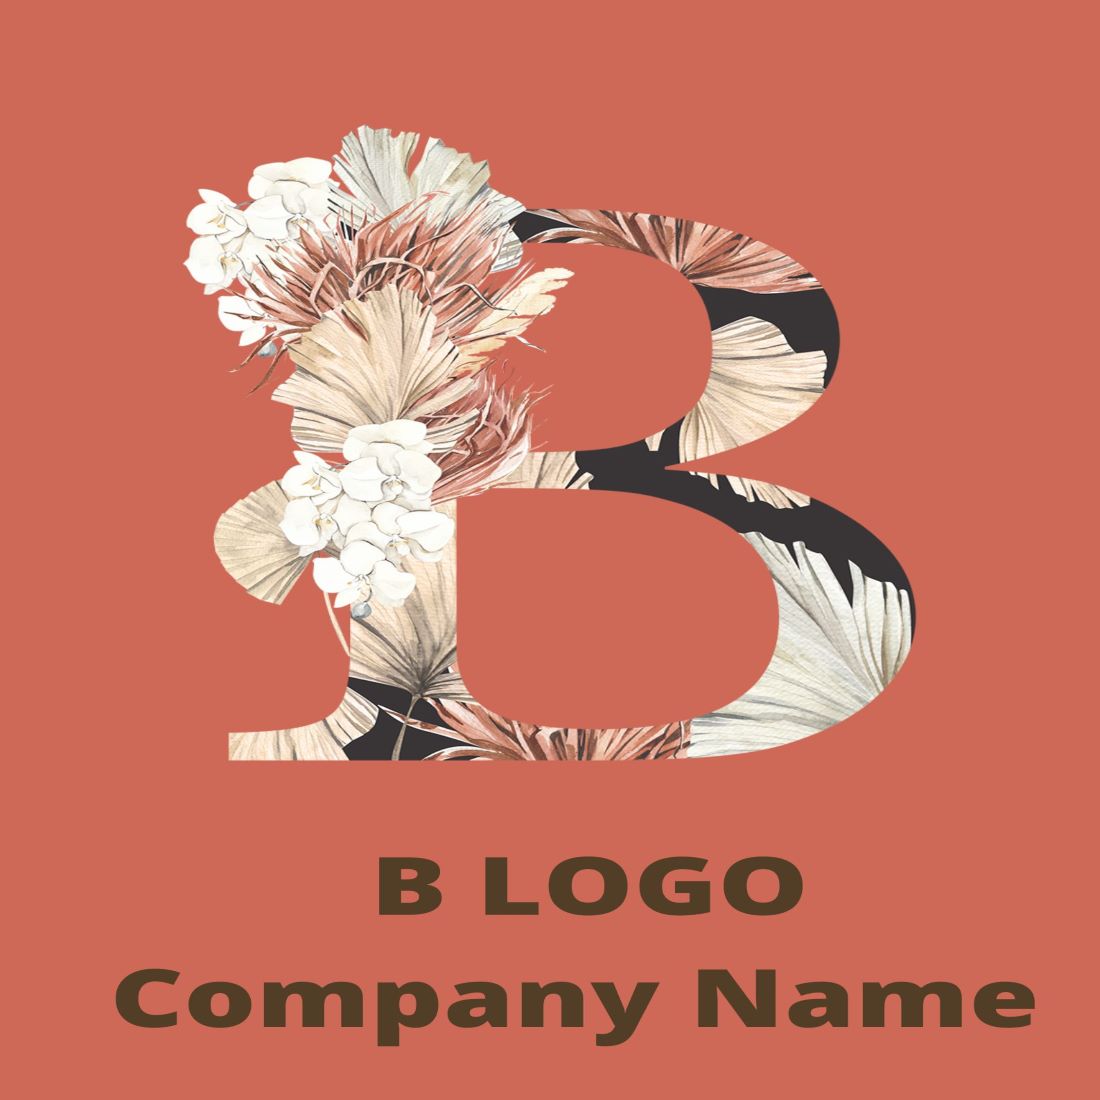 B-Logo Design preview image.